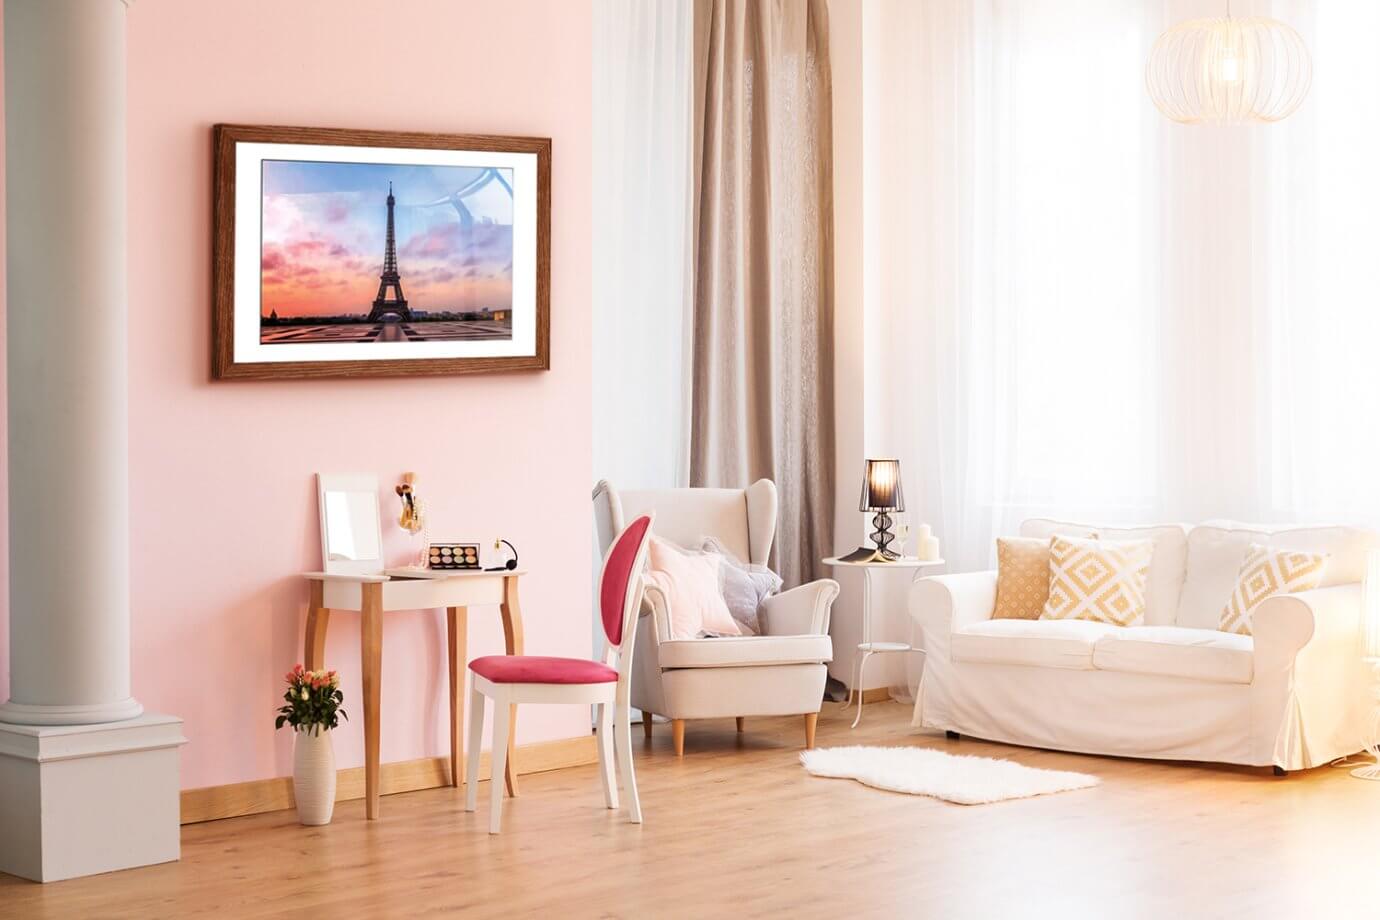 paris artwork in pink room